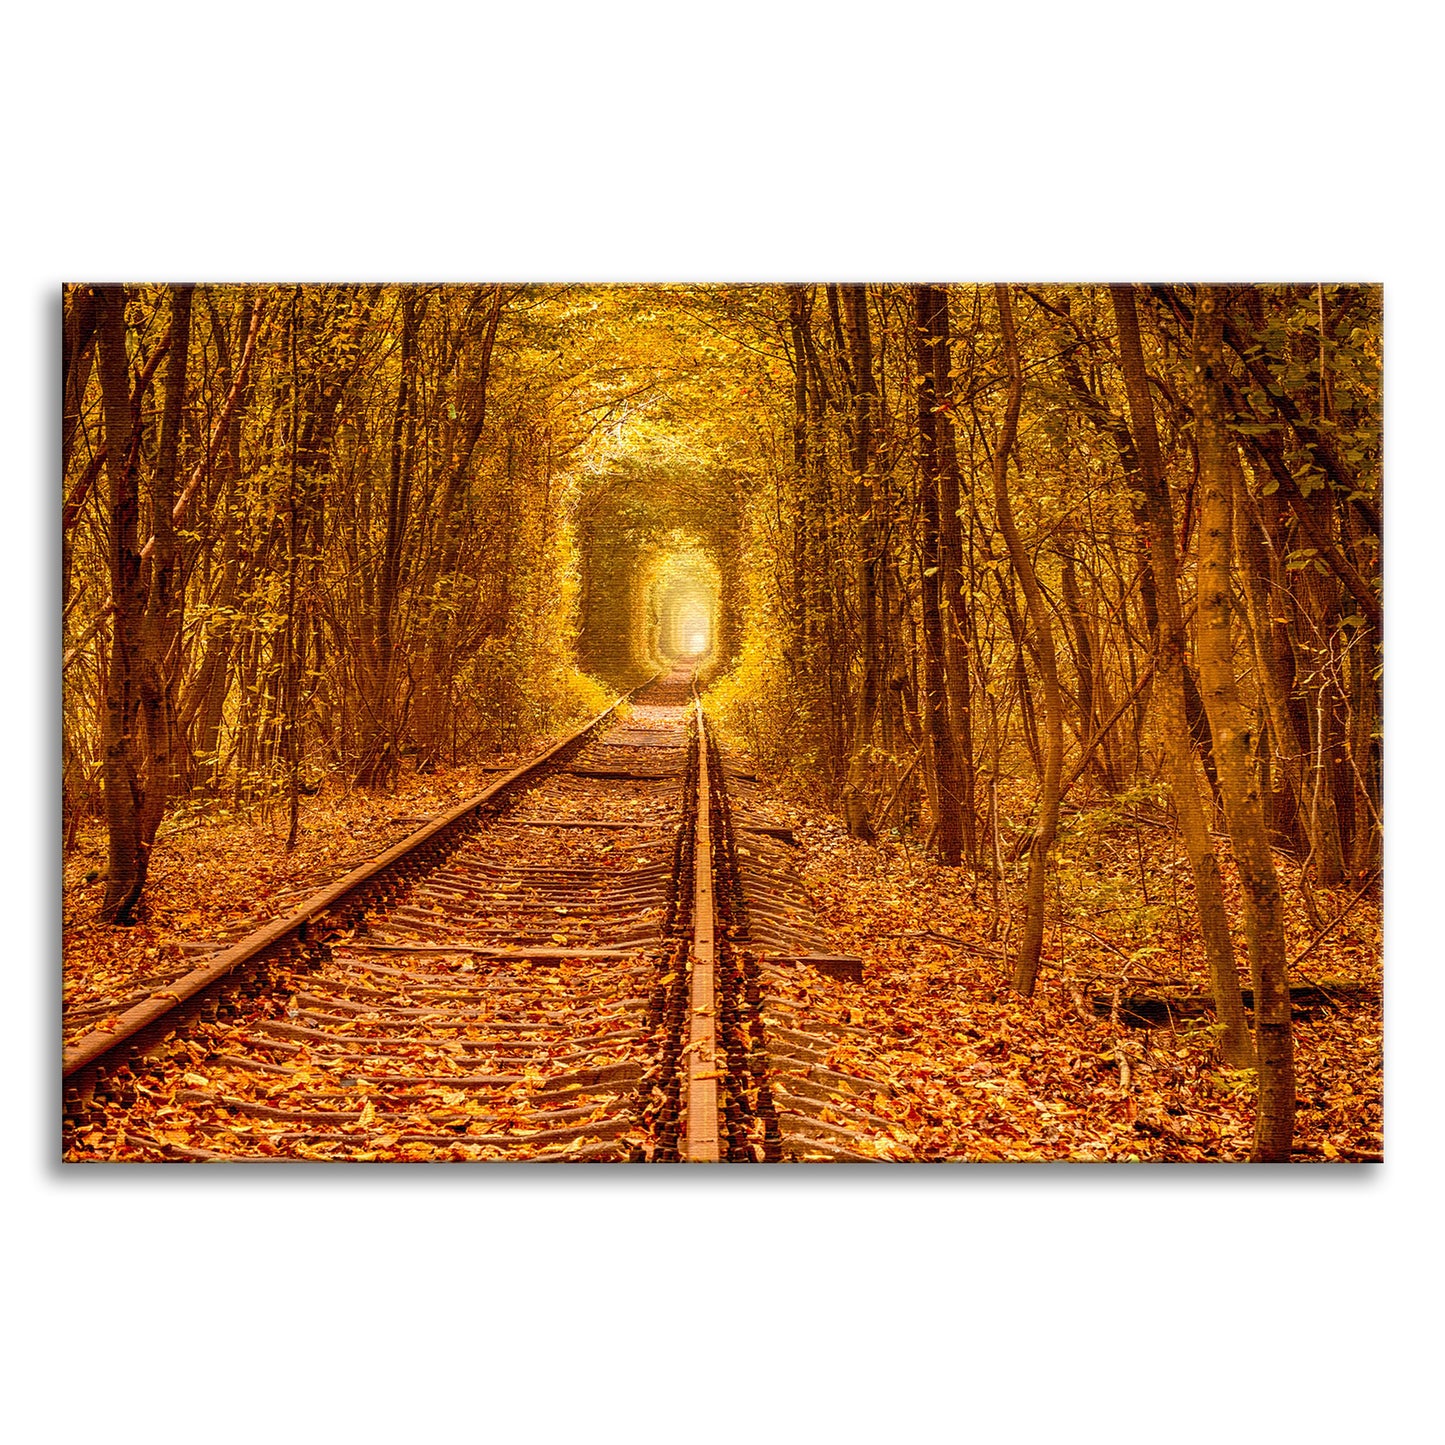 Ukraine Forest Railway Tunnel of Love Landscape Photo Canvas Wall Art Print